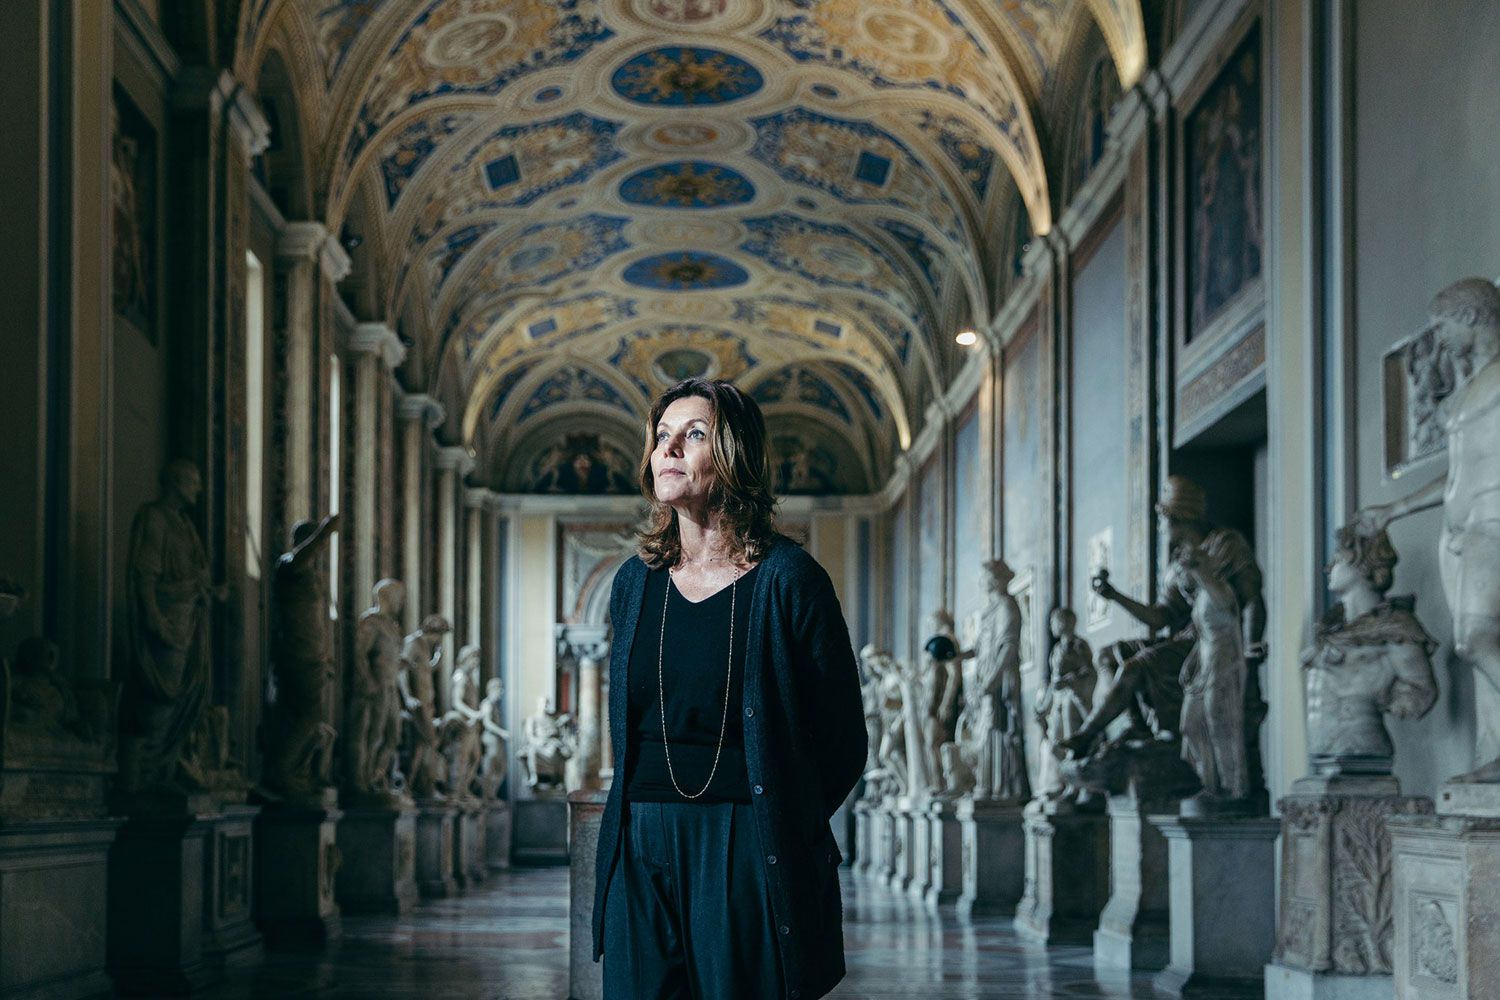 Barbara Jatta director of the Vatican Museums since December 2016